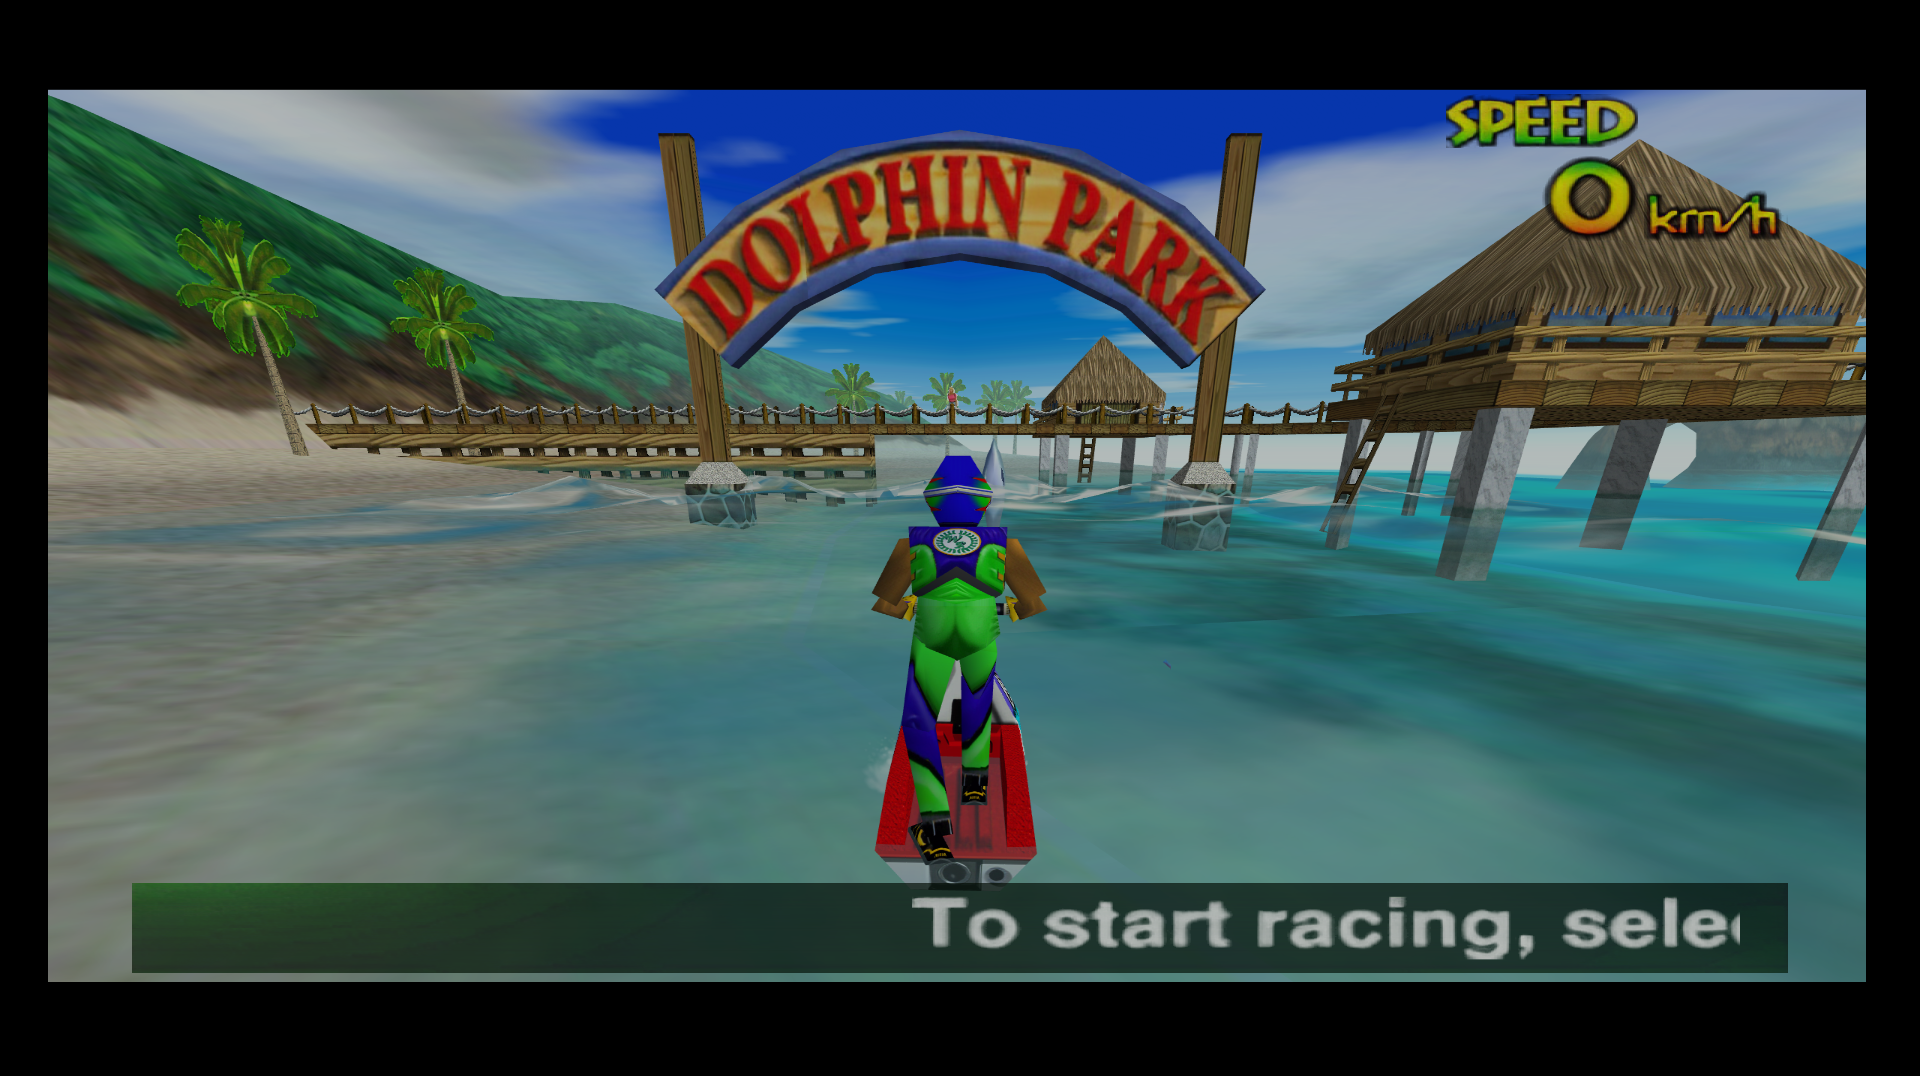 Modded game screenshot